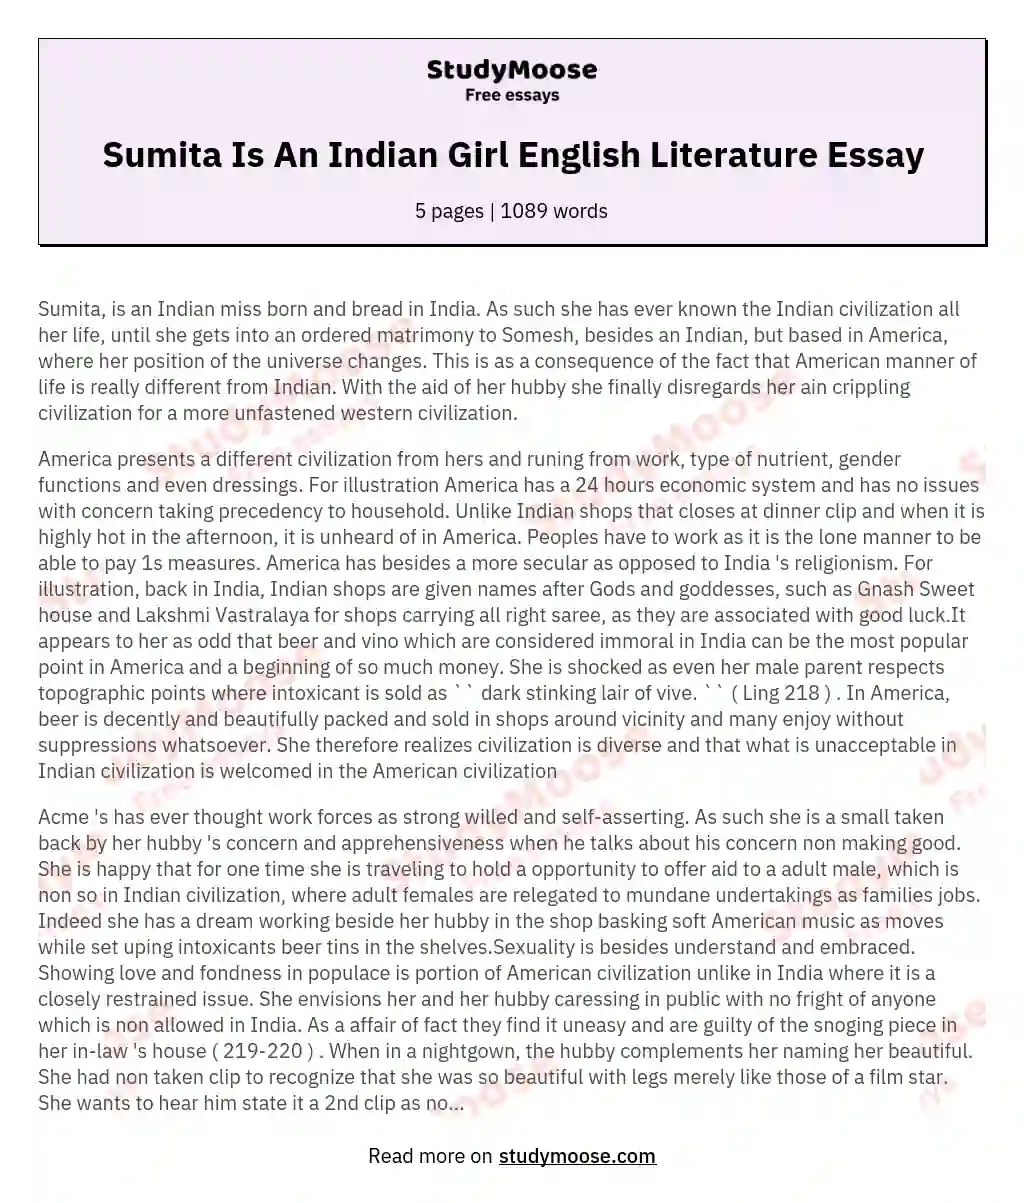 Sumita Is An Indian Girl English Literature Essay essay